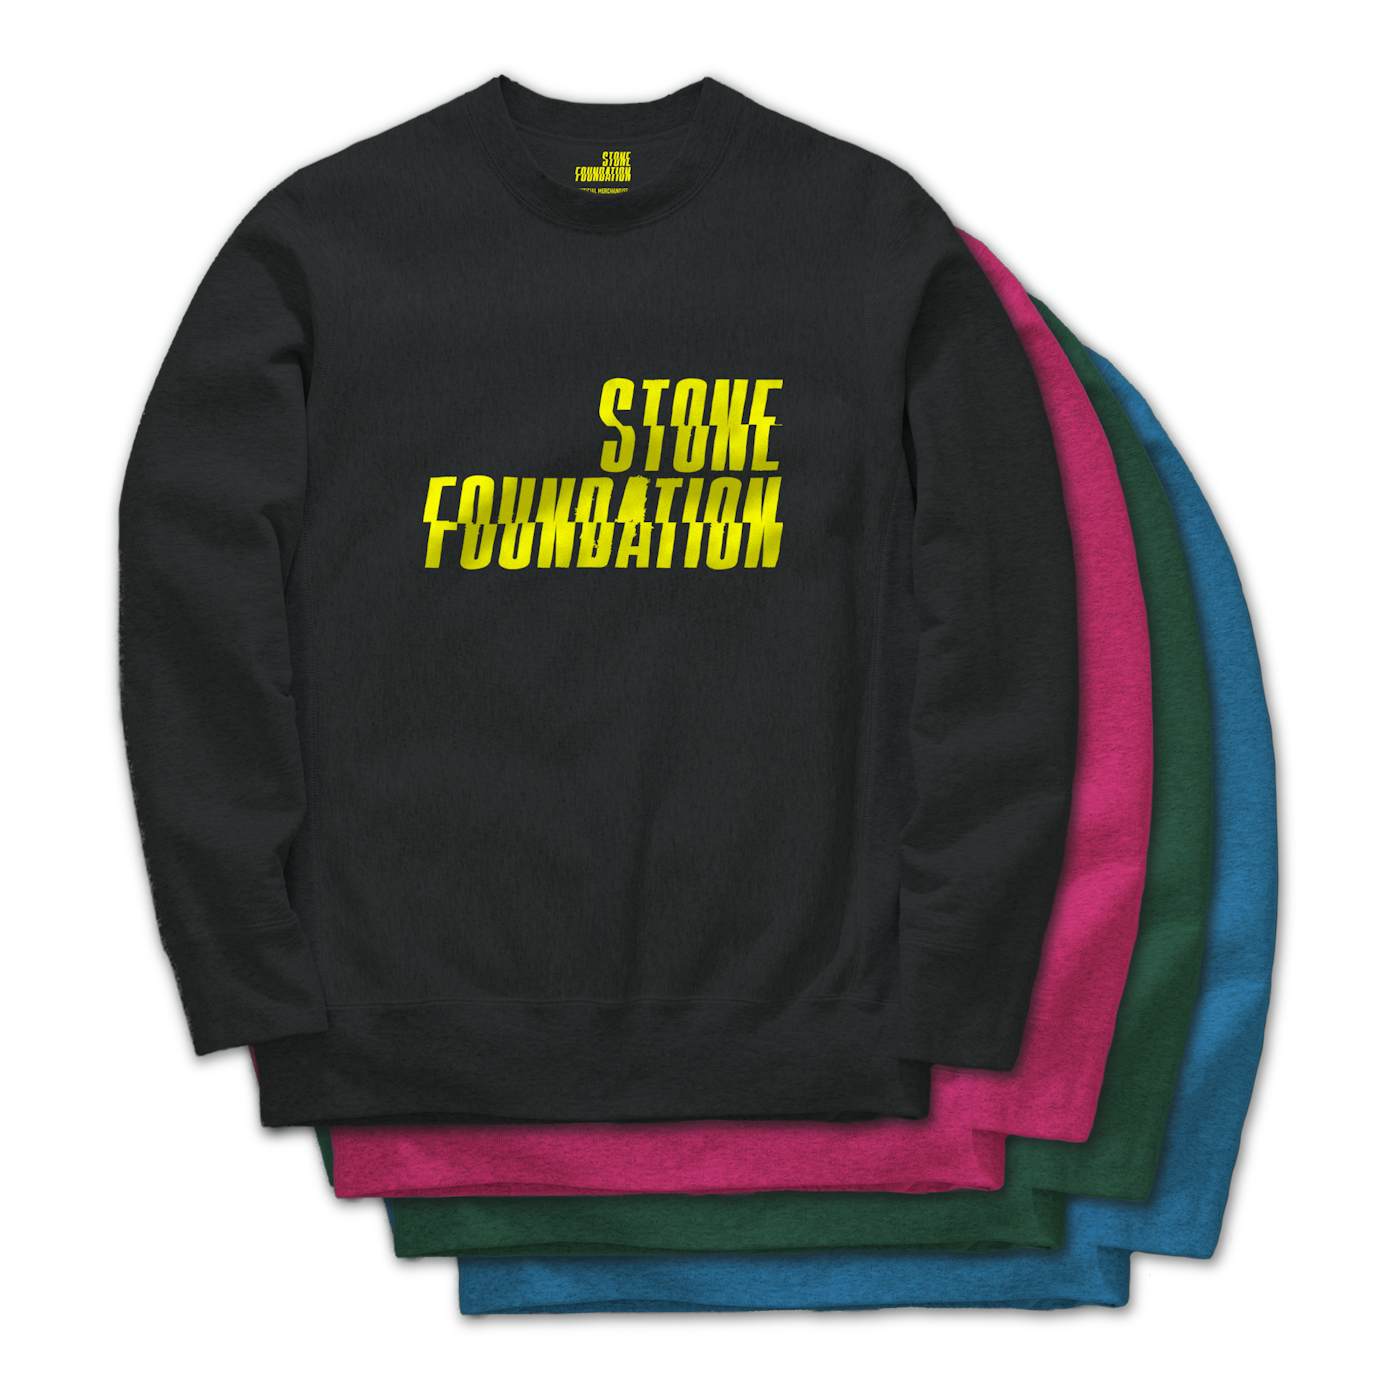 Stone Foundation Logo Sweatshirt